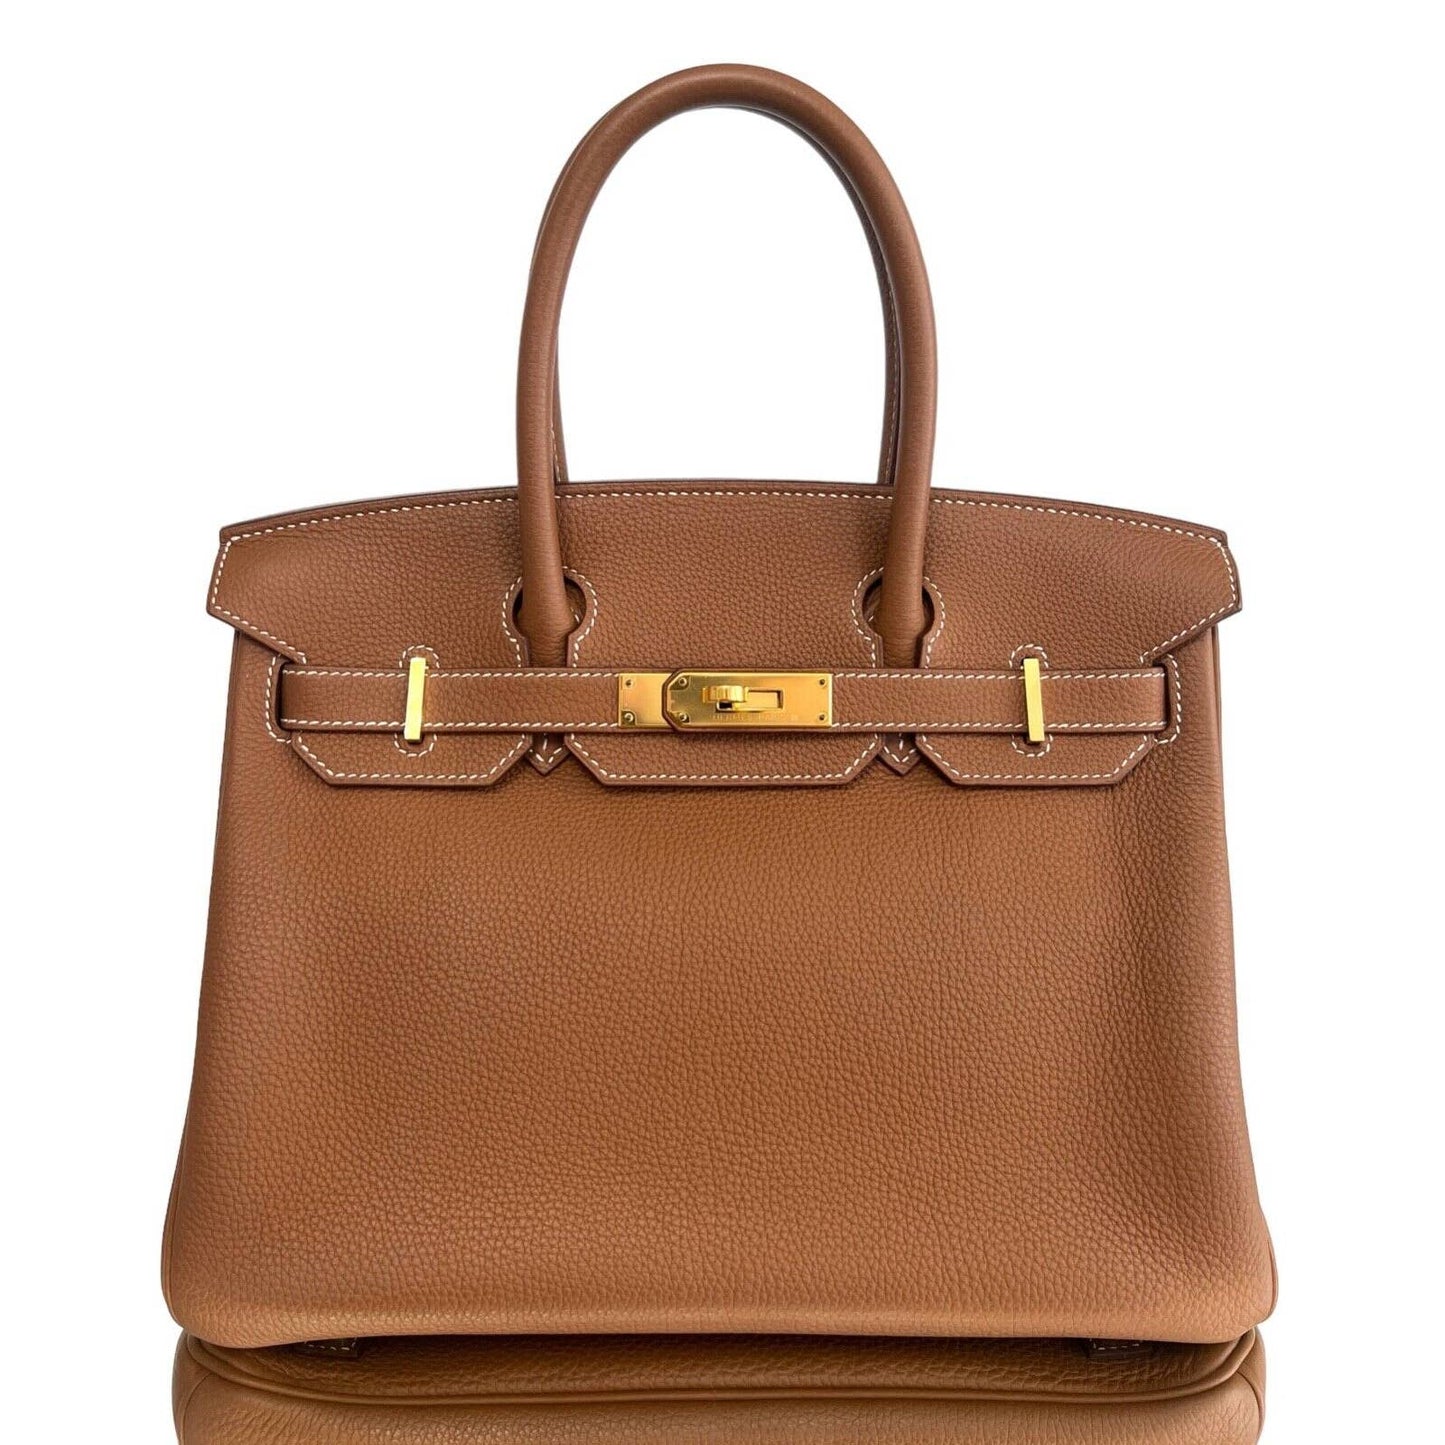 Hermès Birkin 30 Gold Tan Camel Togo Leather Gold Hardware Handbag Bag